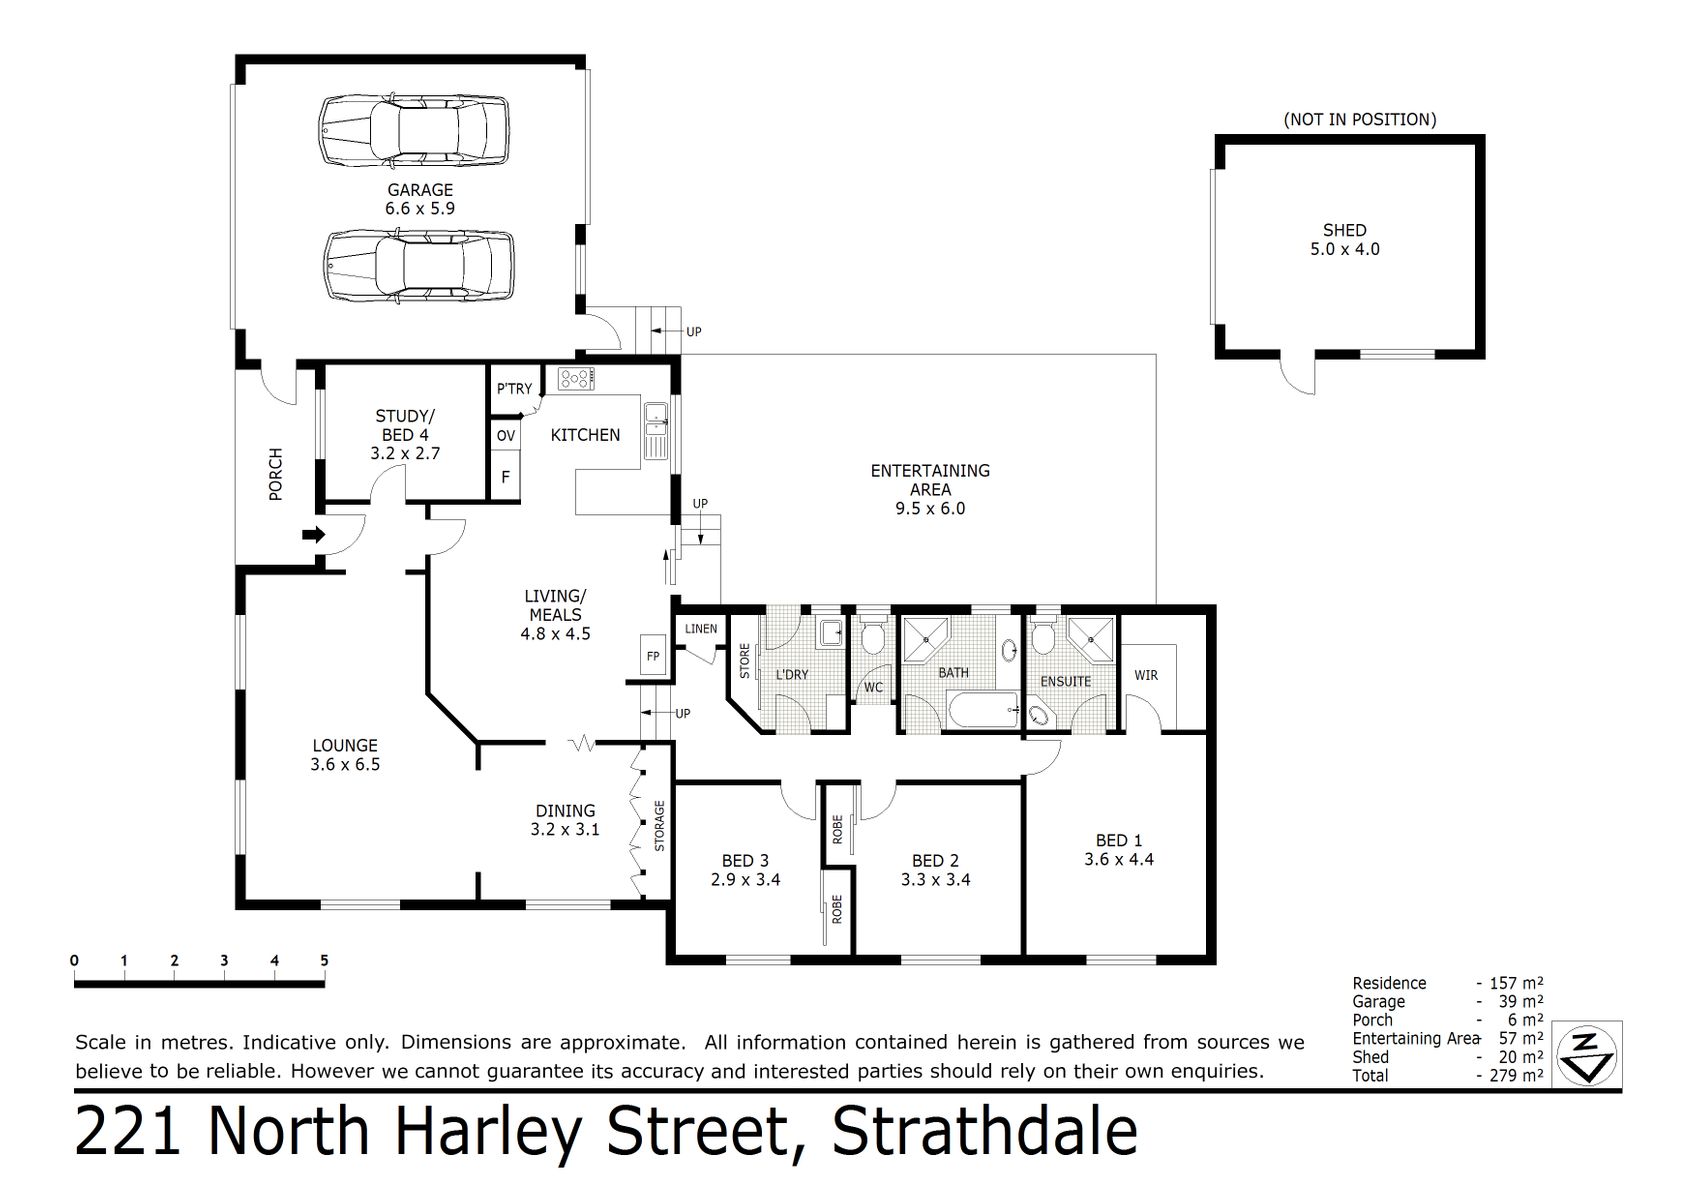 221 North Harley Street Strathdale (07 DEC 2020) 196sqm